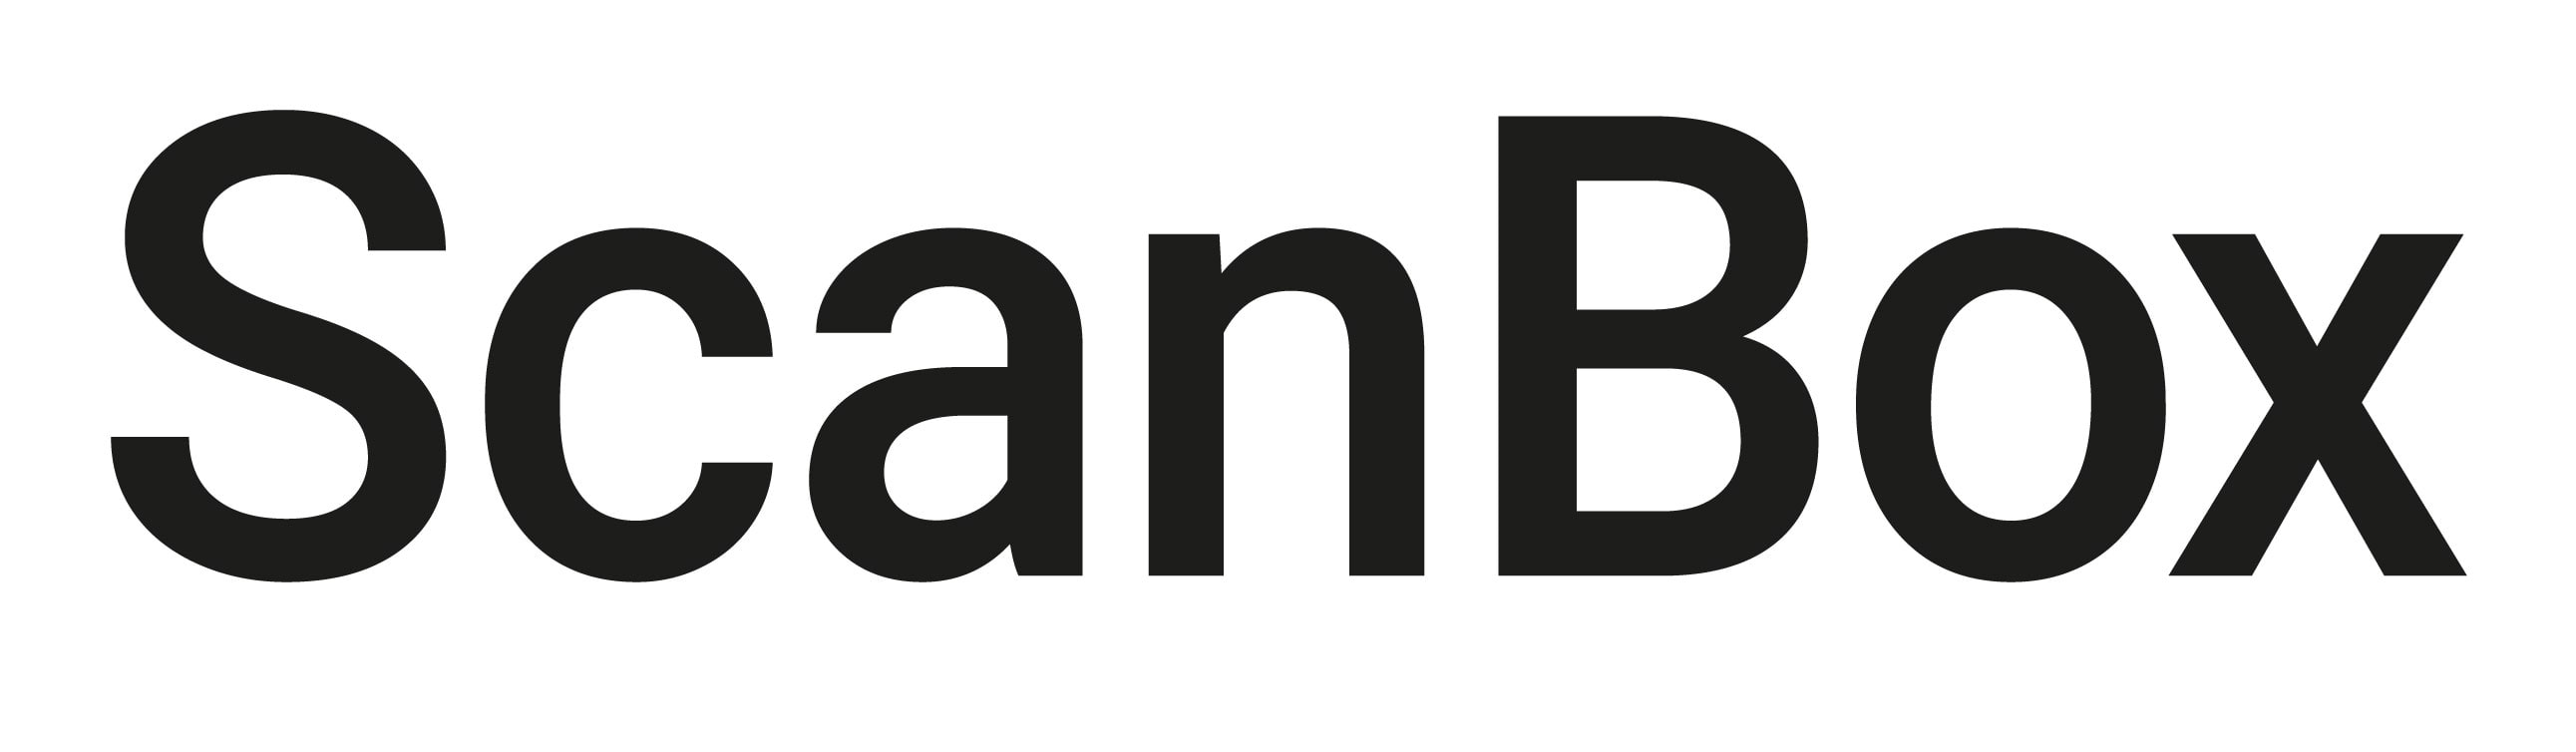 Scanbox_Logotype_RBG